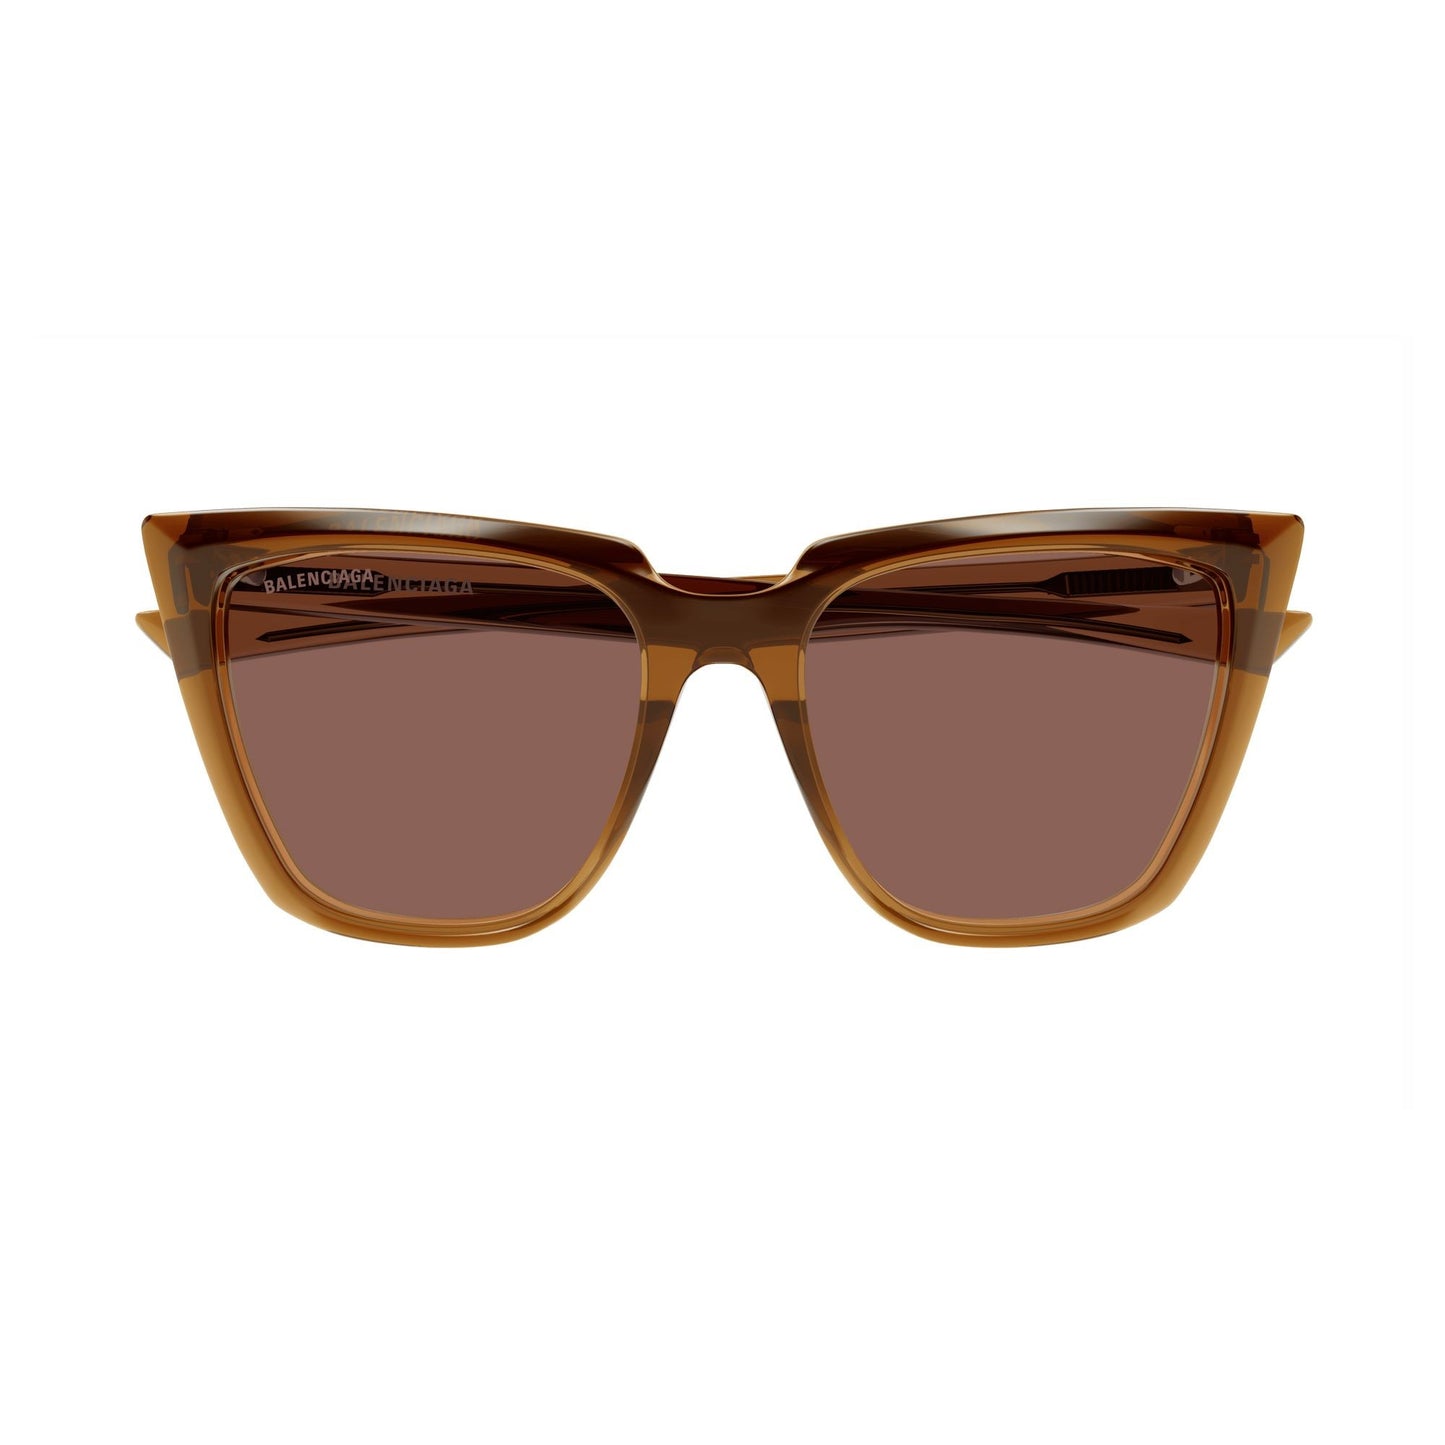 Balenciaga BB0046S-007 55mm New Sunglasses